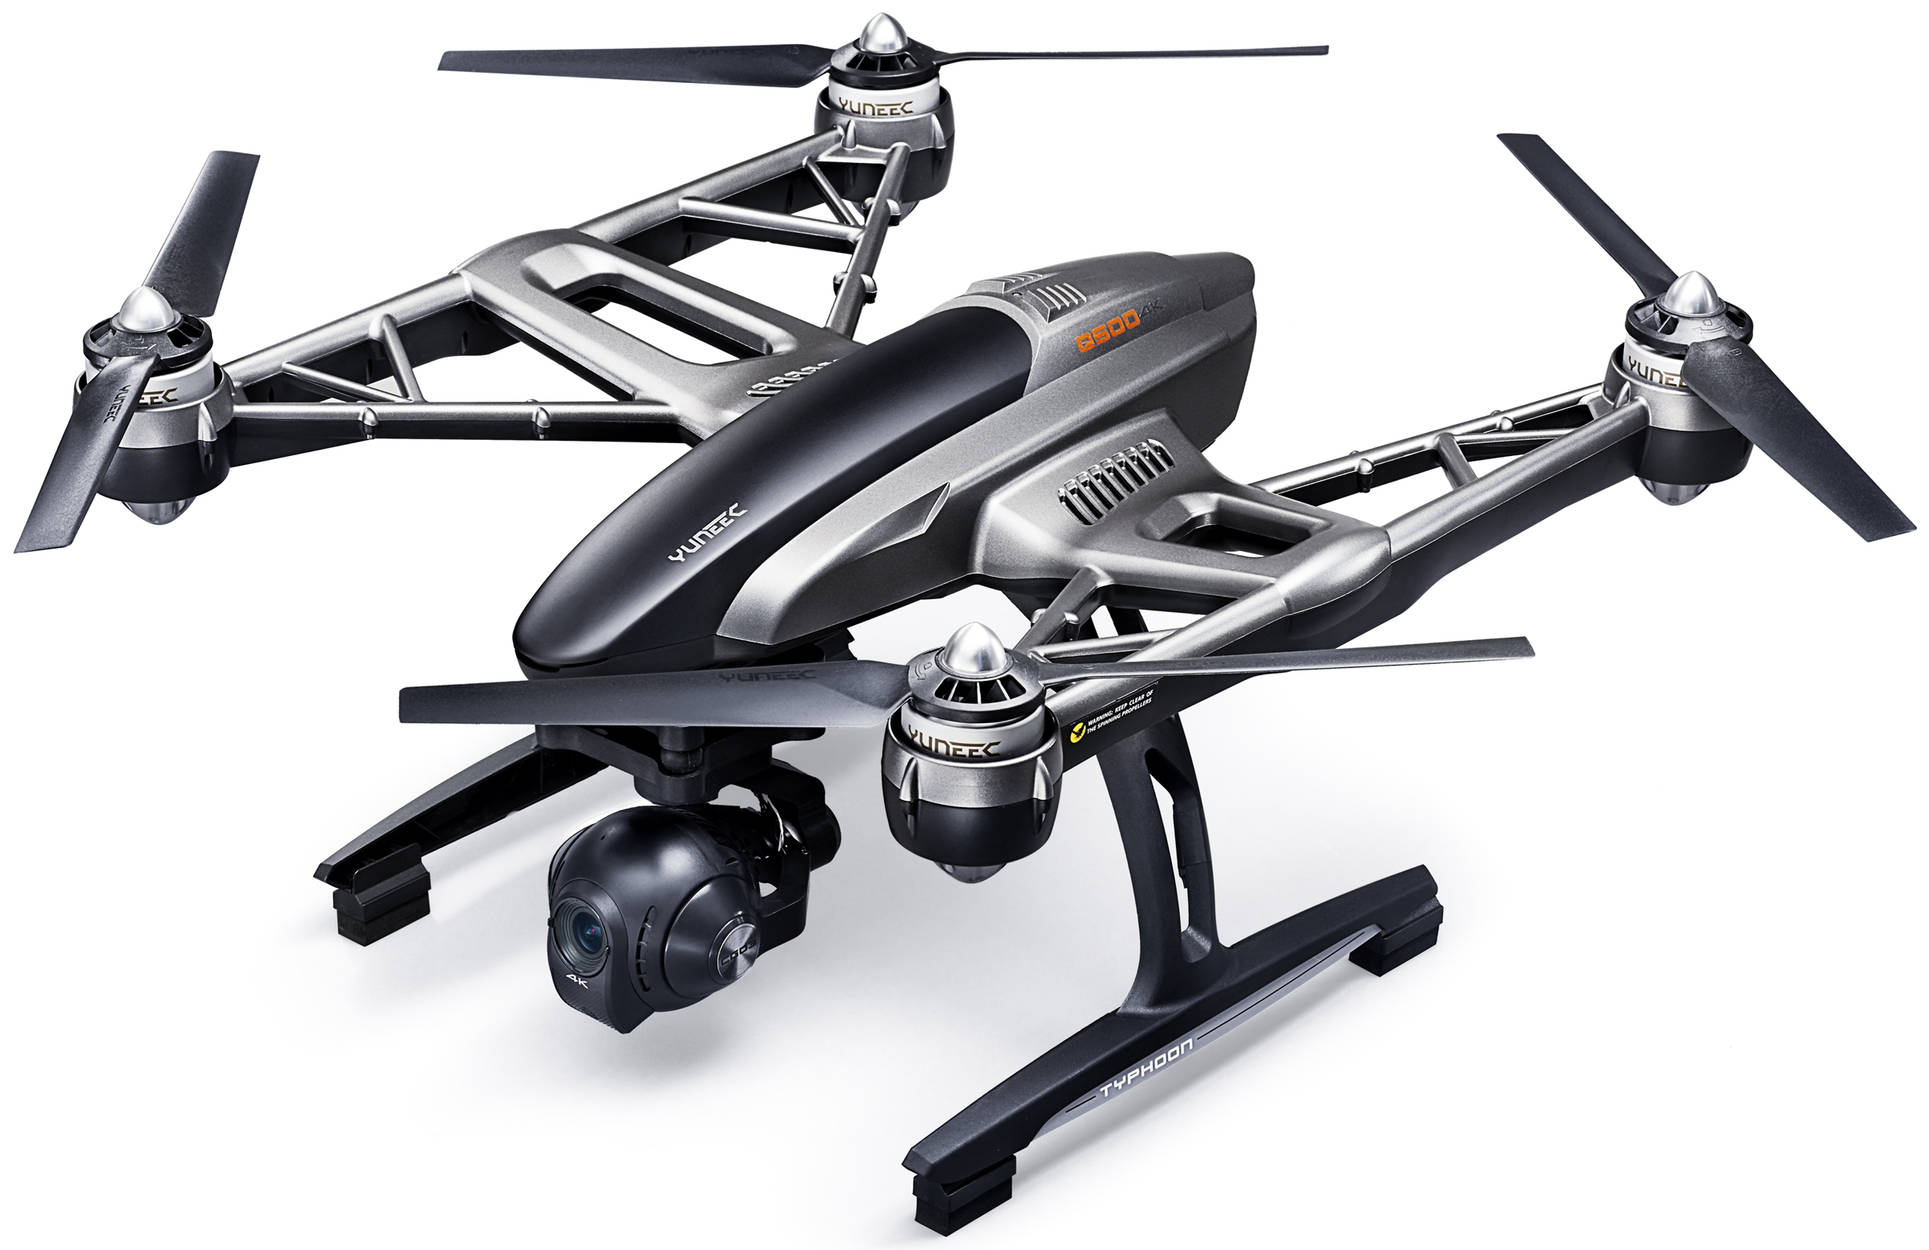 Top 10 drones 2016 - Yuneec Q500 4K Typhoon drone